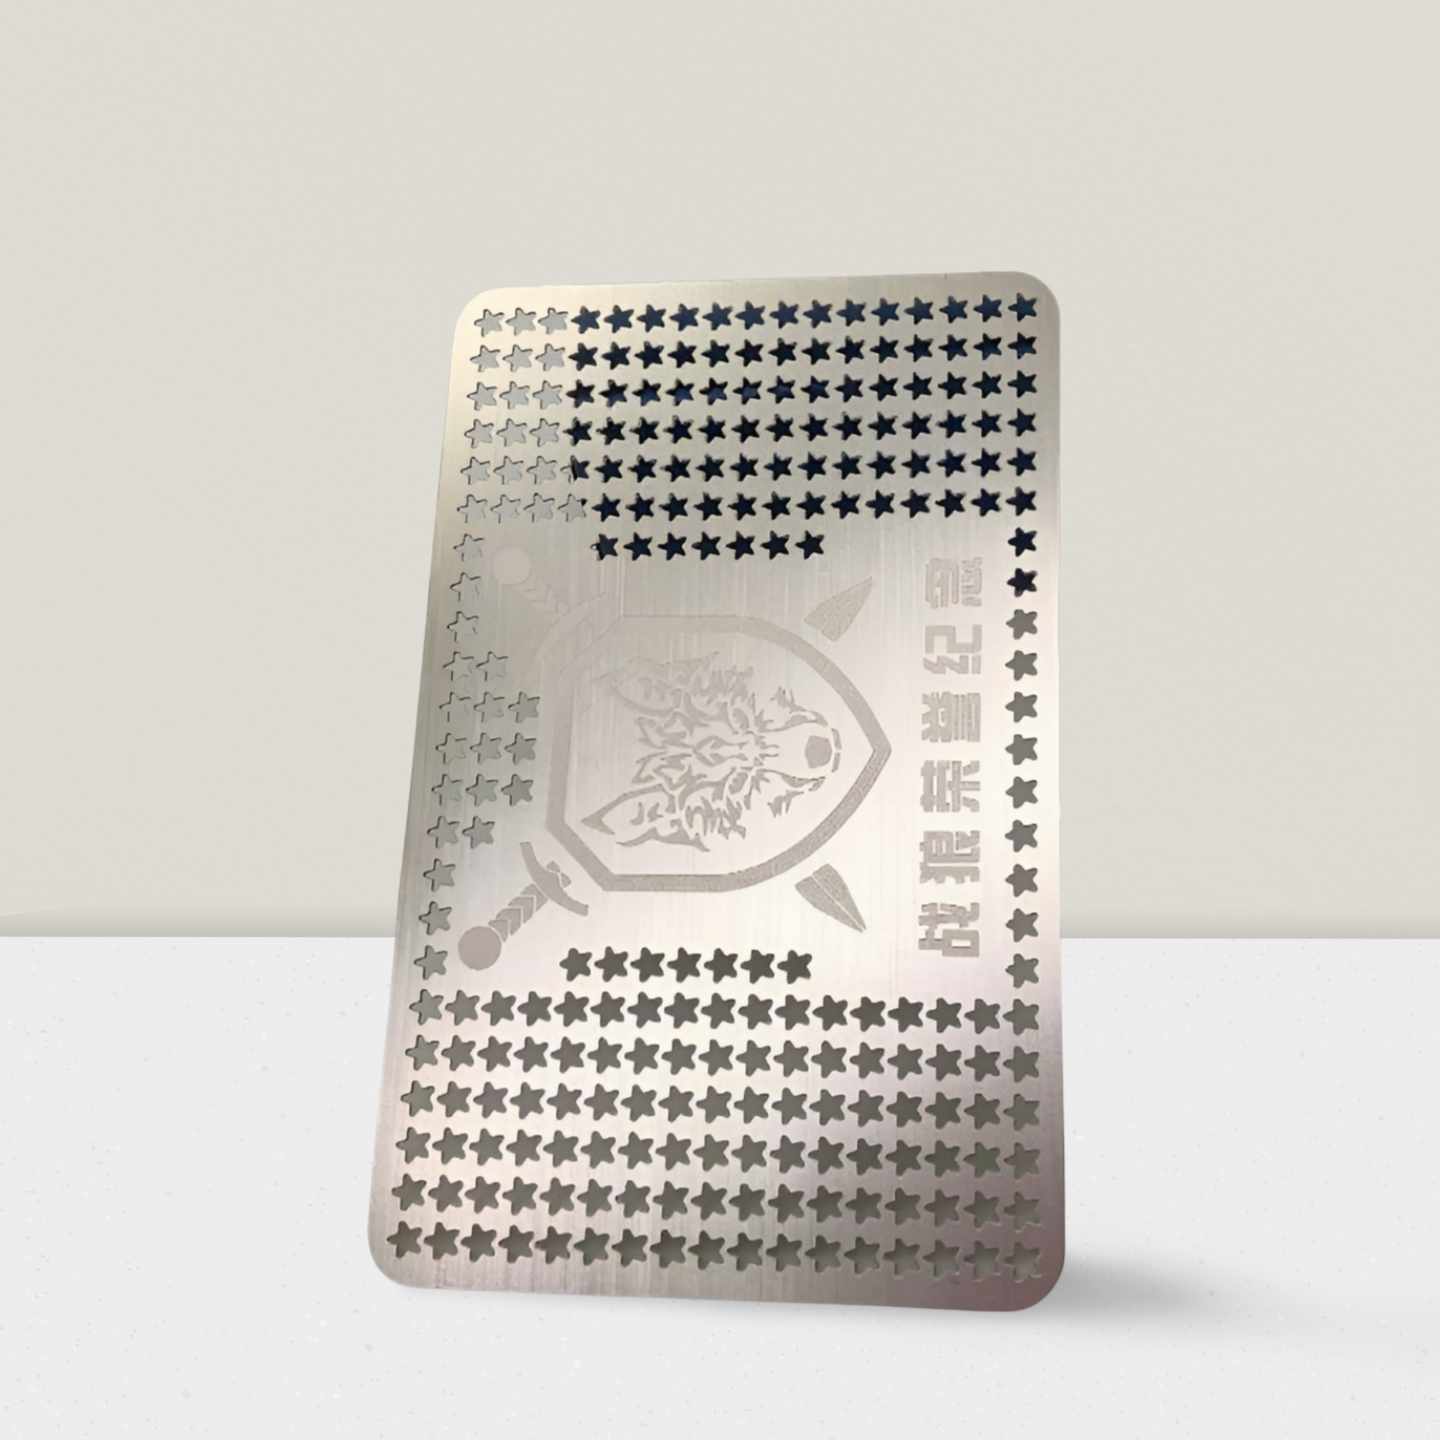 QR code business card metal